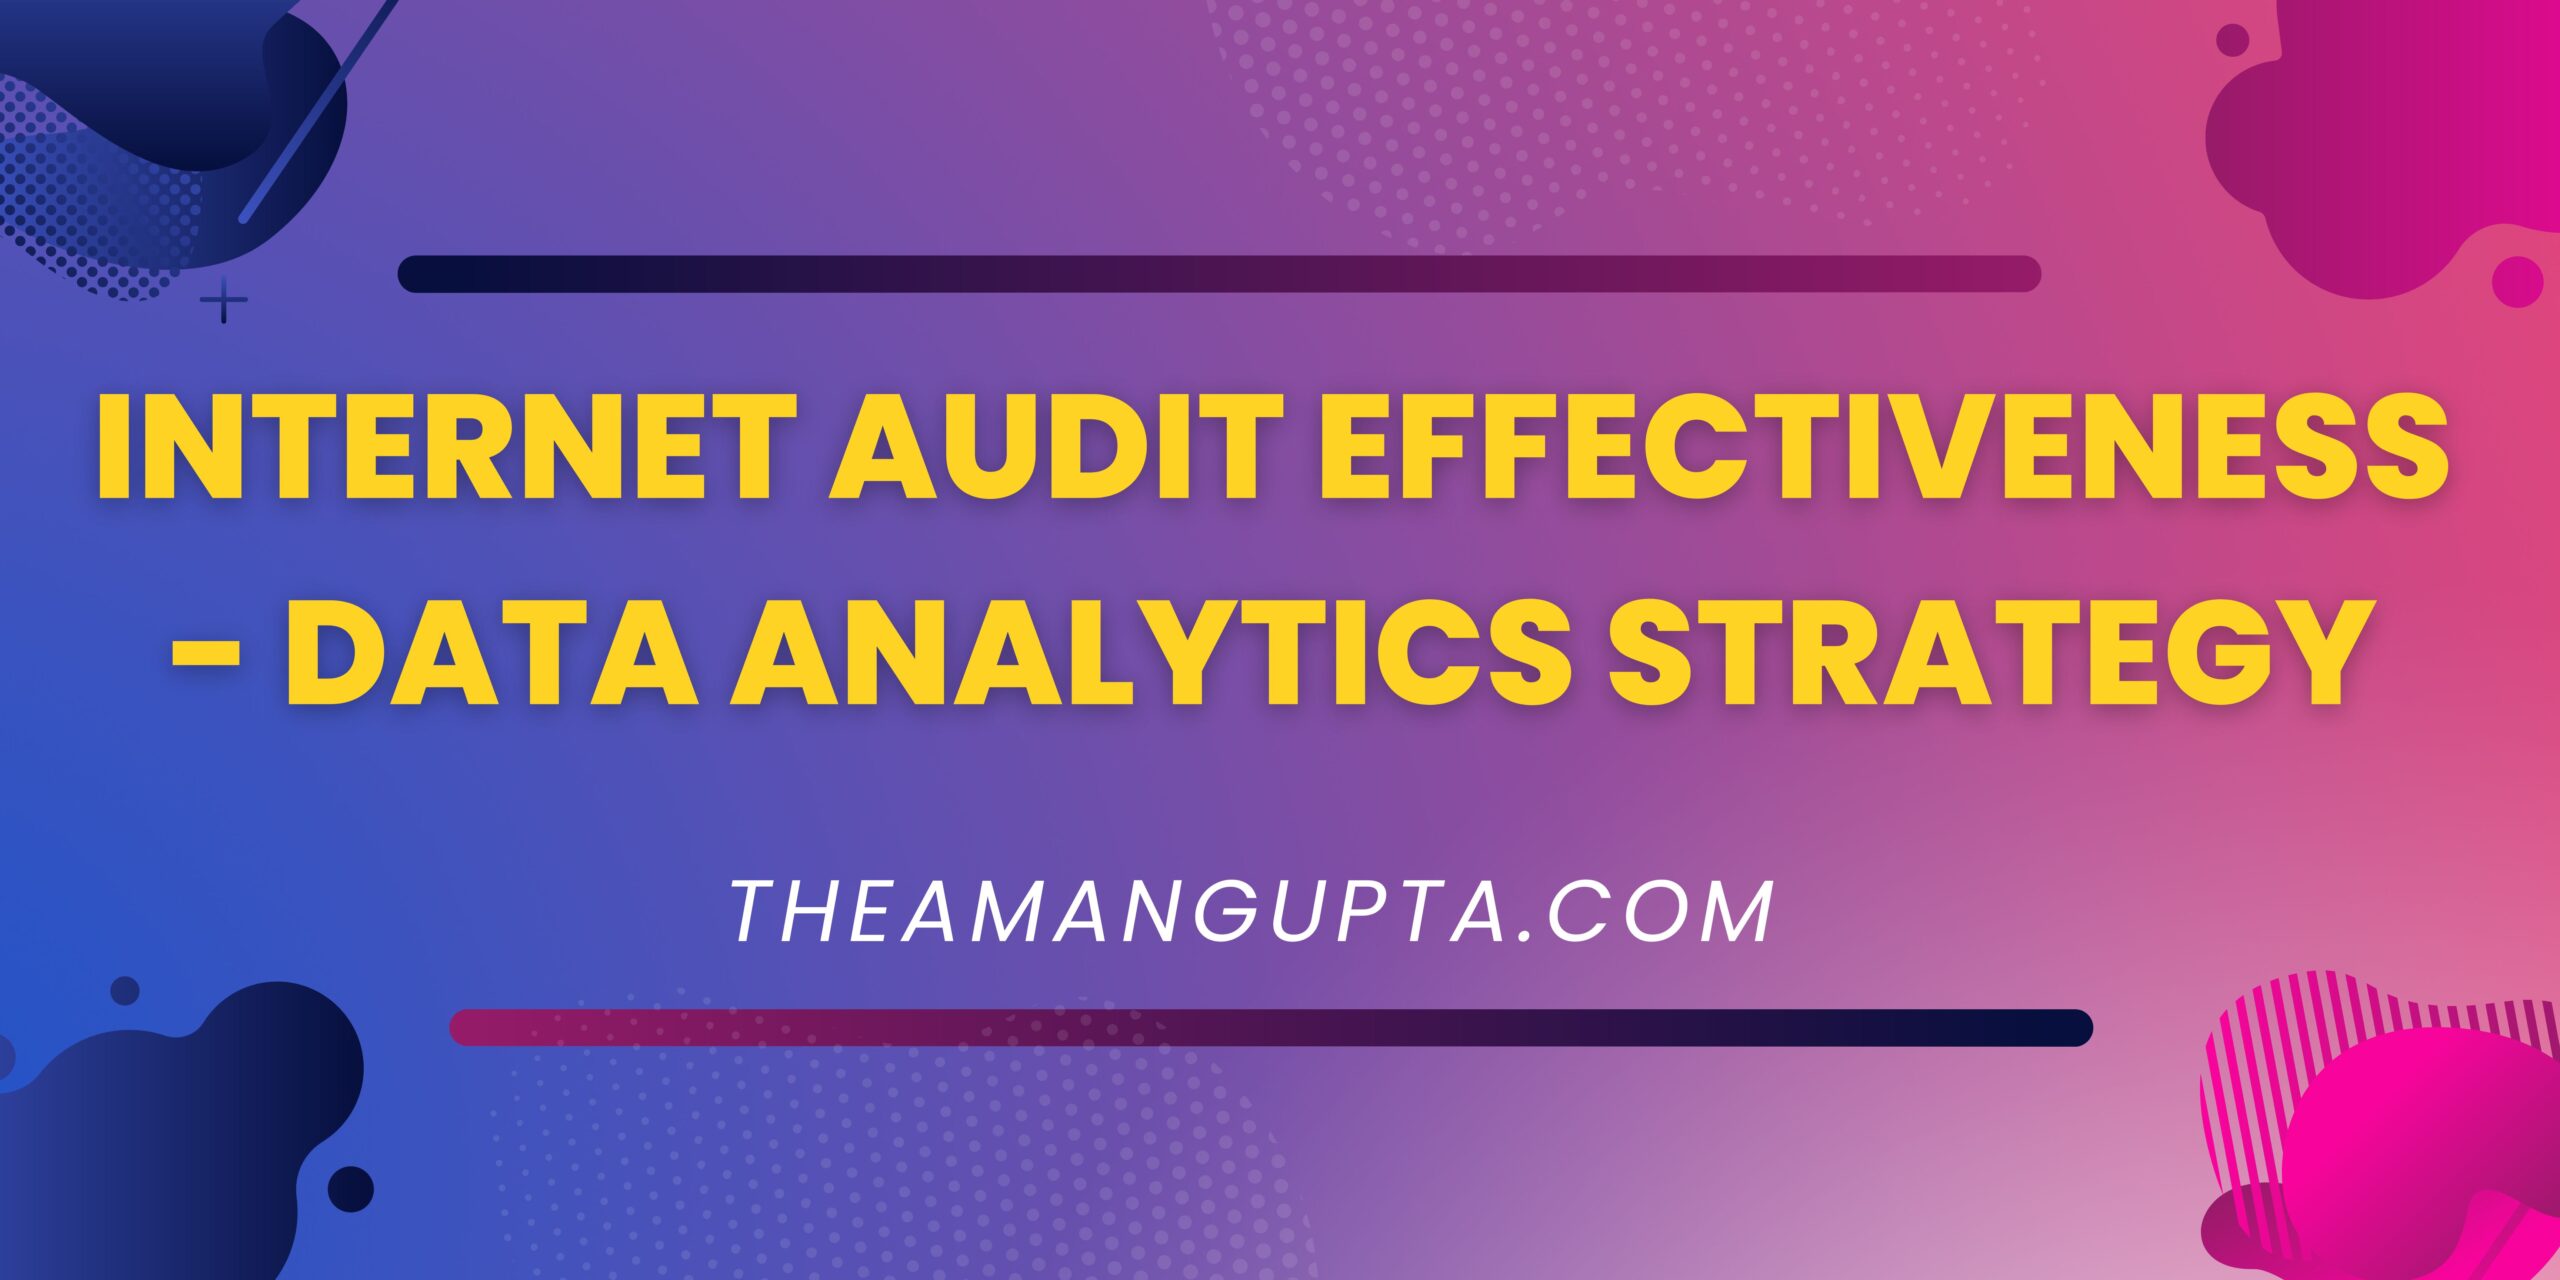 Internet Audit Effectiveness - Data Analytics Strategy|Data Analytics|Theamangupta|Theamangupta